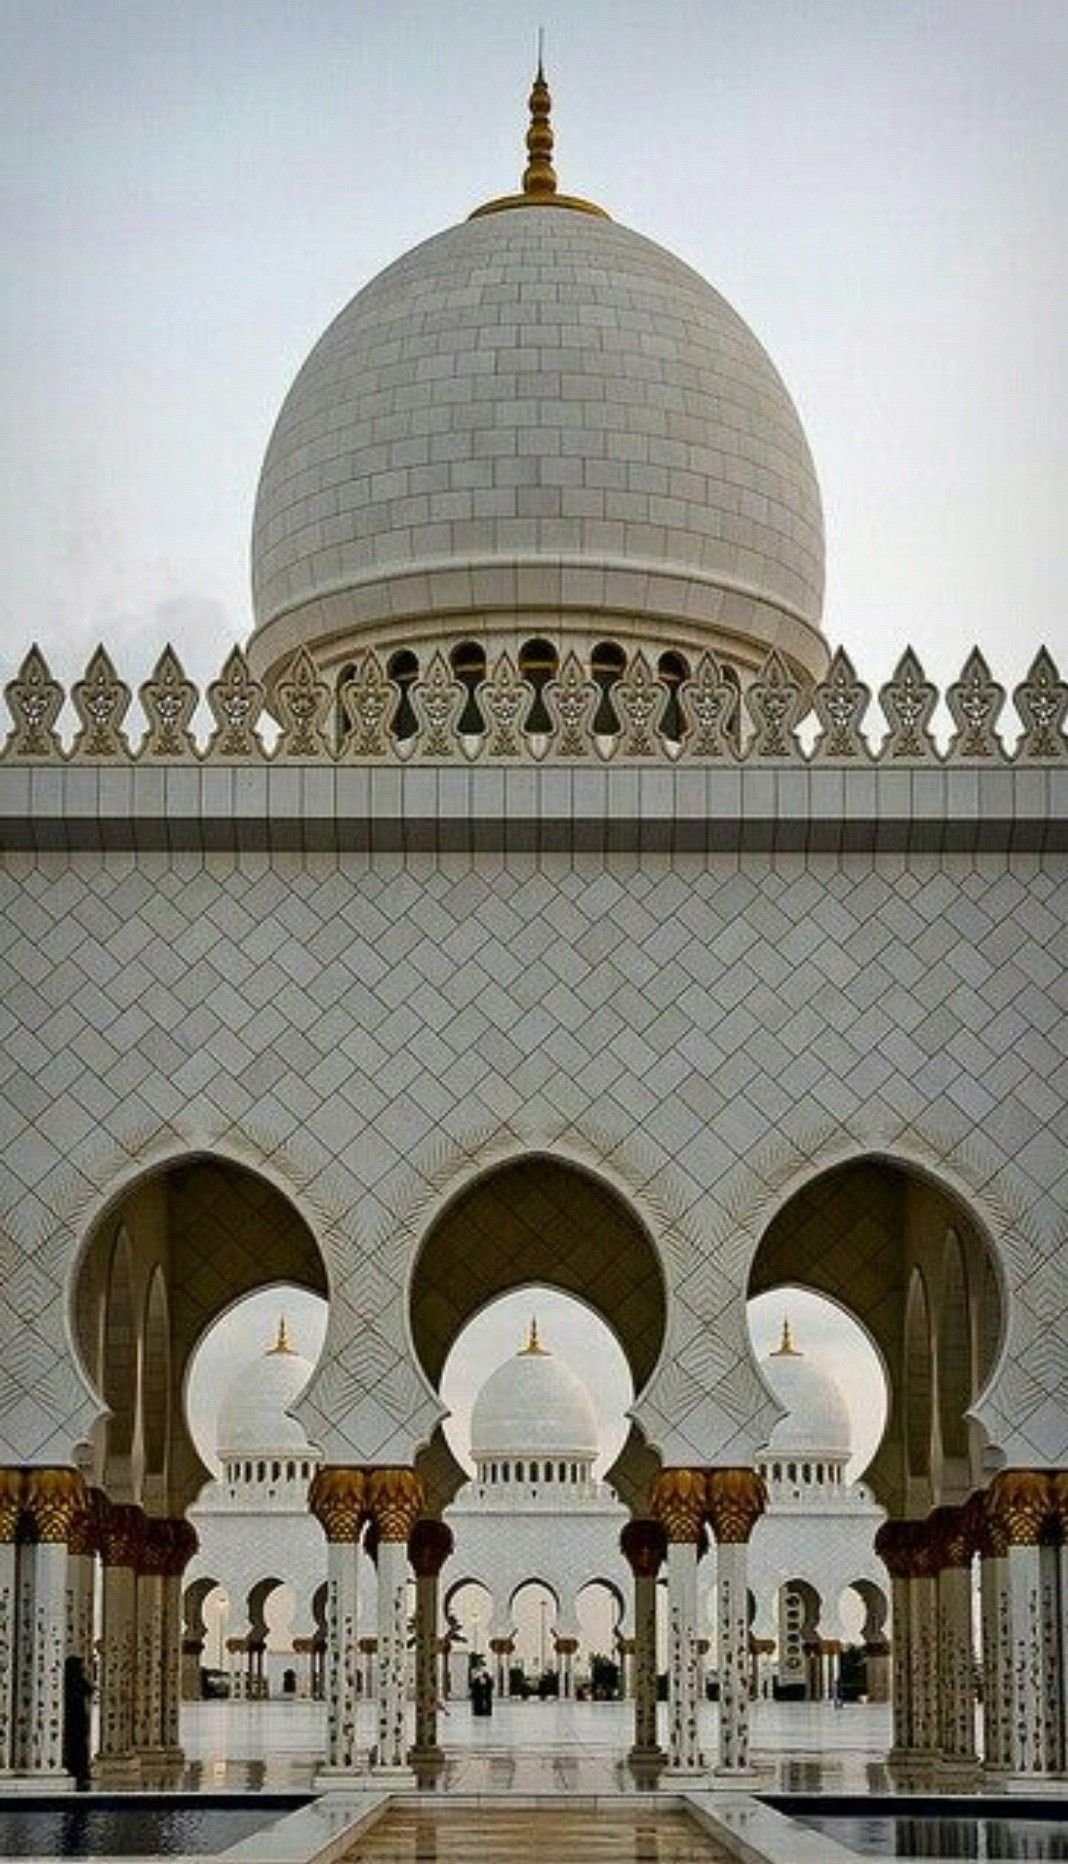 Abu Dhabi синагога мечеть Церковь. Архитектура Ислама мечеть в Абу Даби. Индийский храм в Абу Даби. Большая мечеть в Дубае.